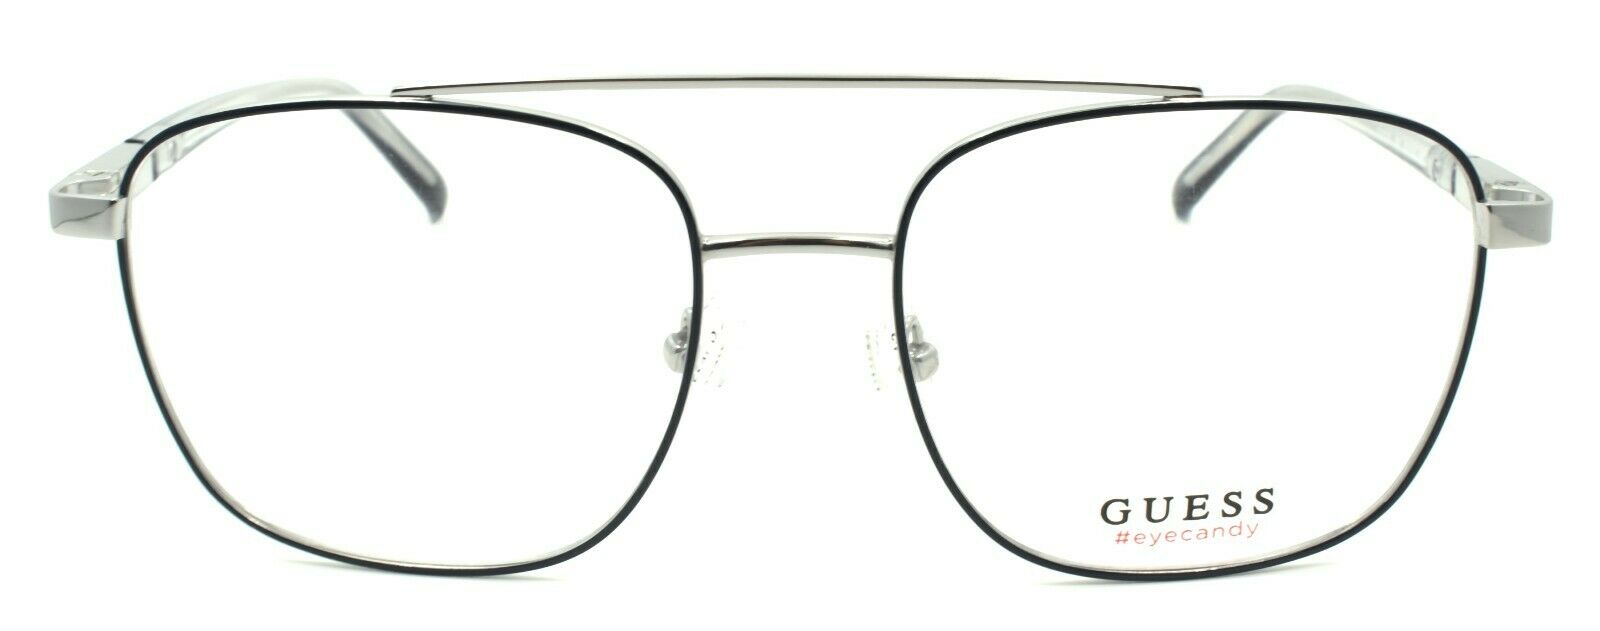 2-GUESS GU3038 090 Eye Candy Eyeglasses Frames Aviator 52-17-135 Shiny Blue-889214013156-IKSpecs